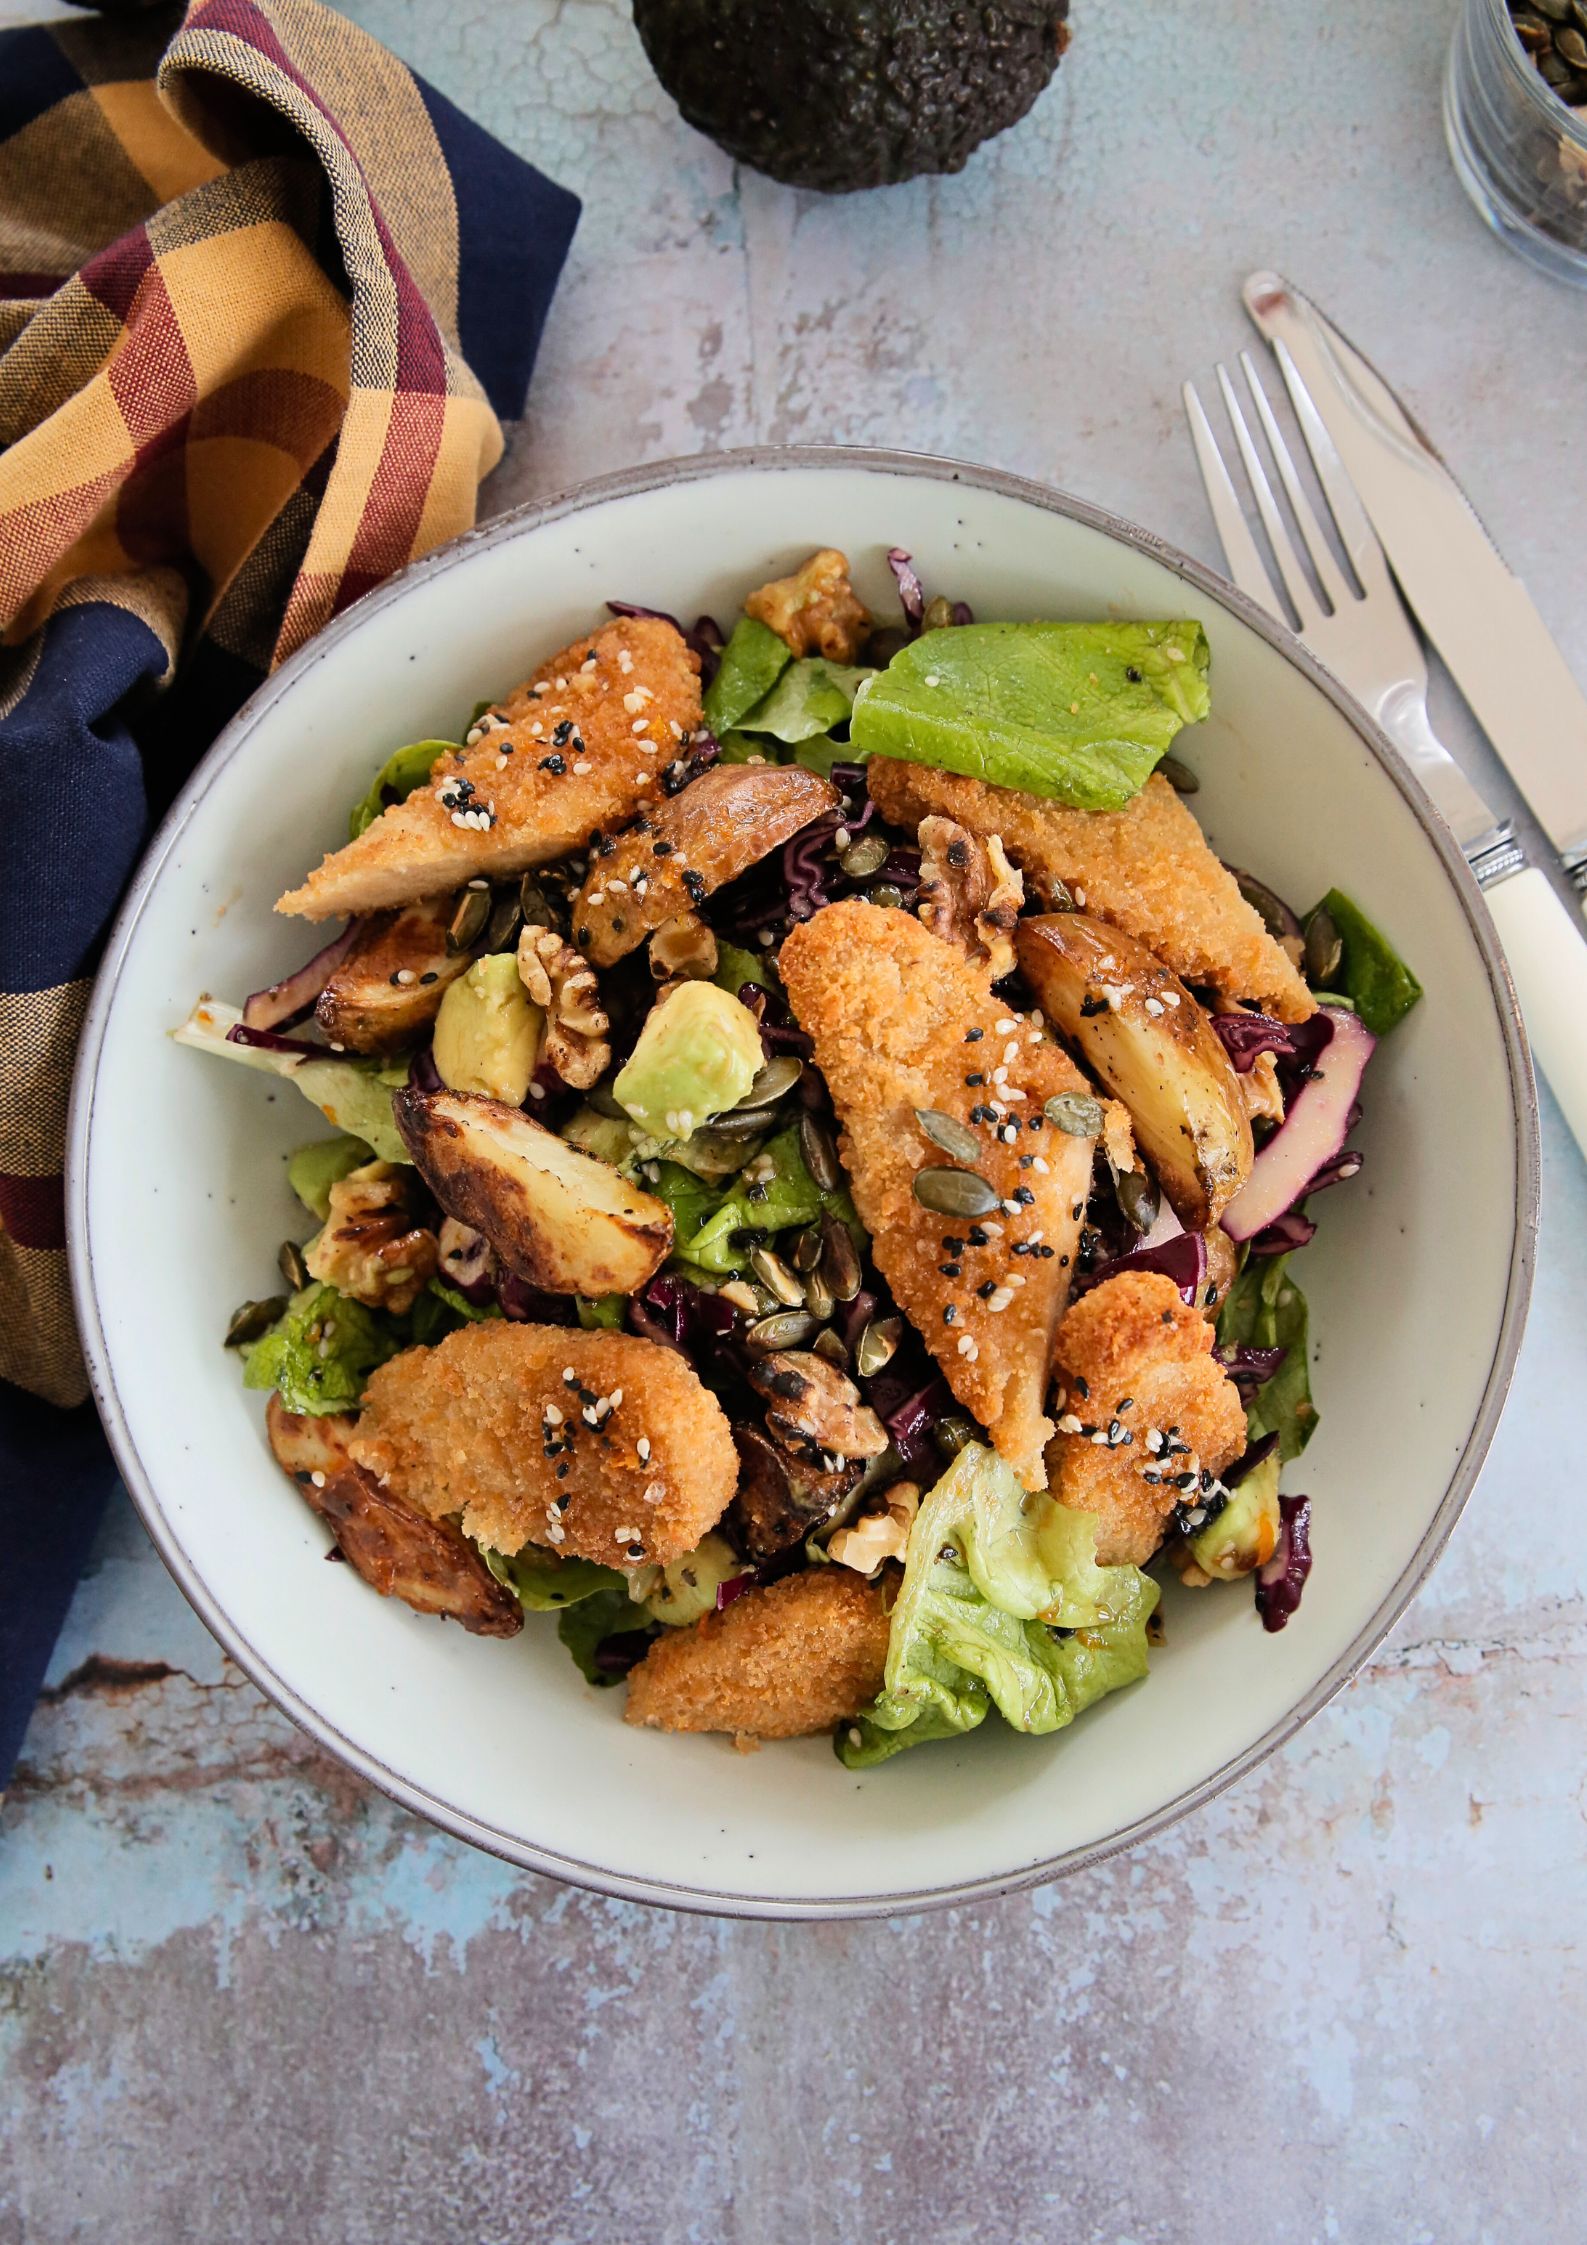 Winter Salad with 'Chicken' and Orange Sesame Dressing